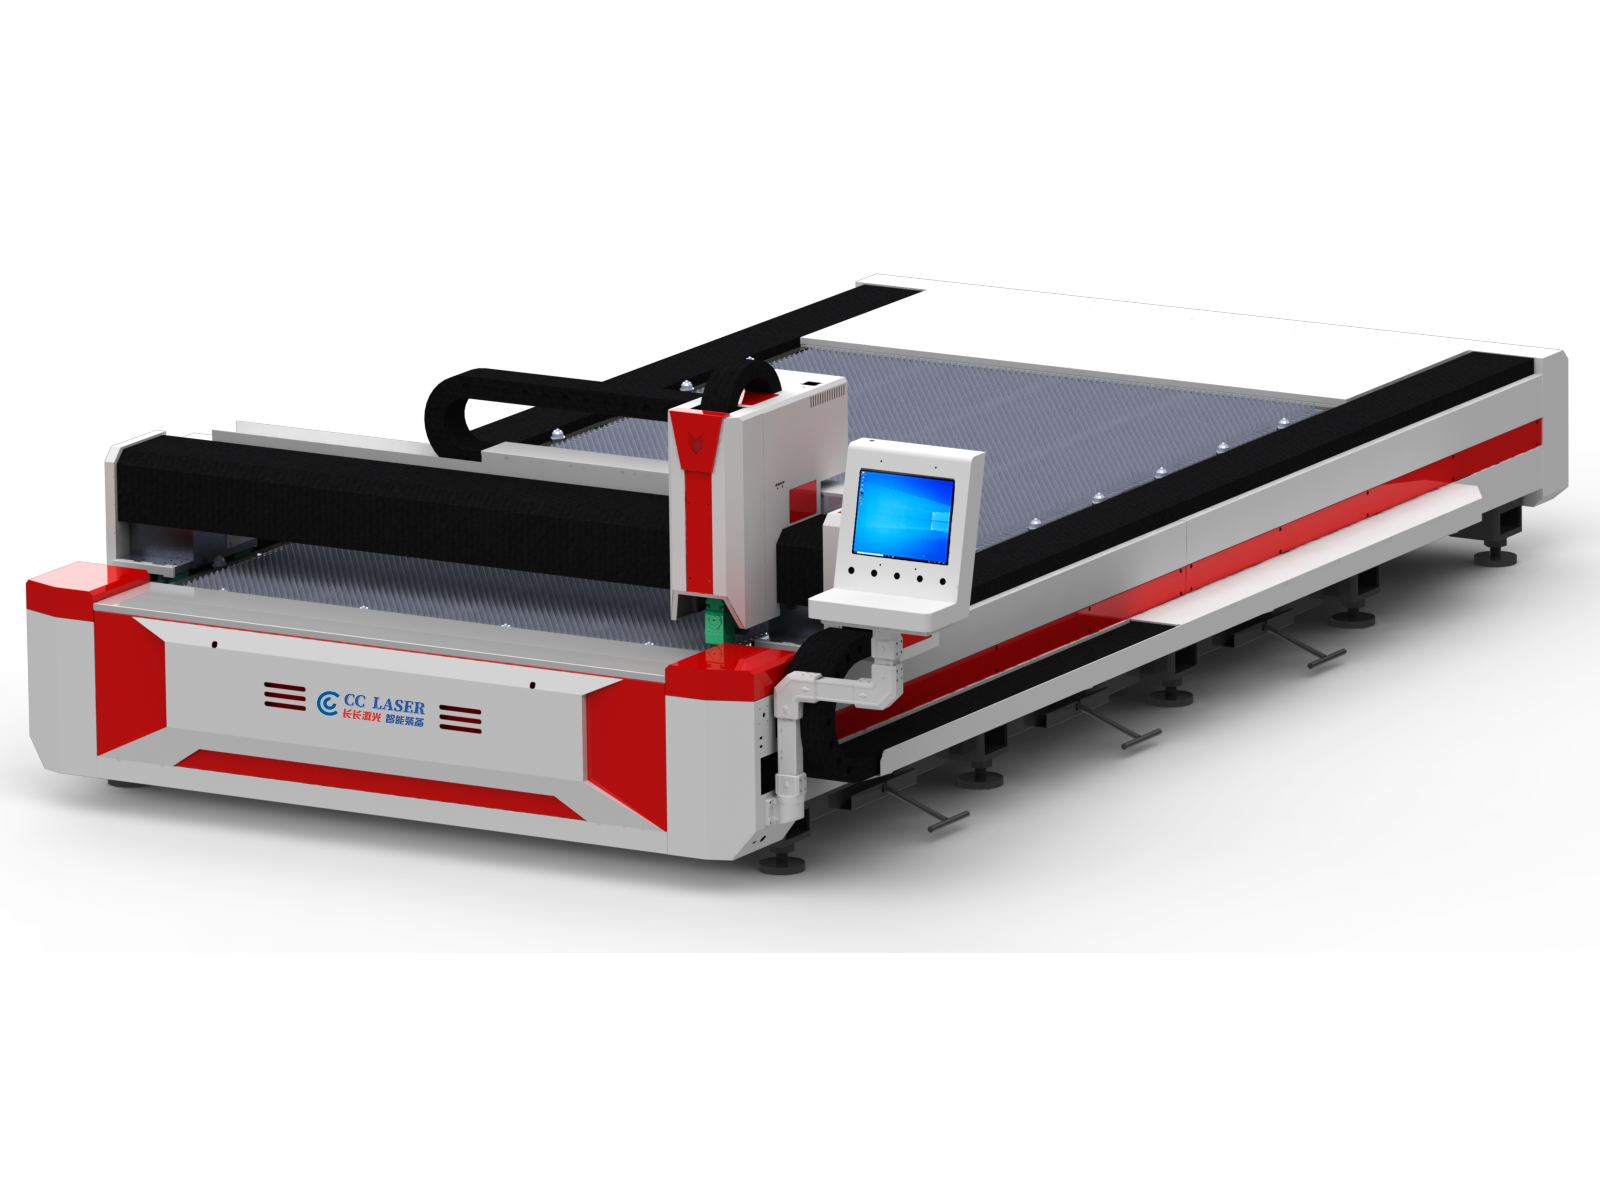 CC4020B Single Platform Fiber Laser Cutting Machine